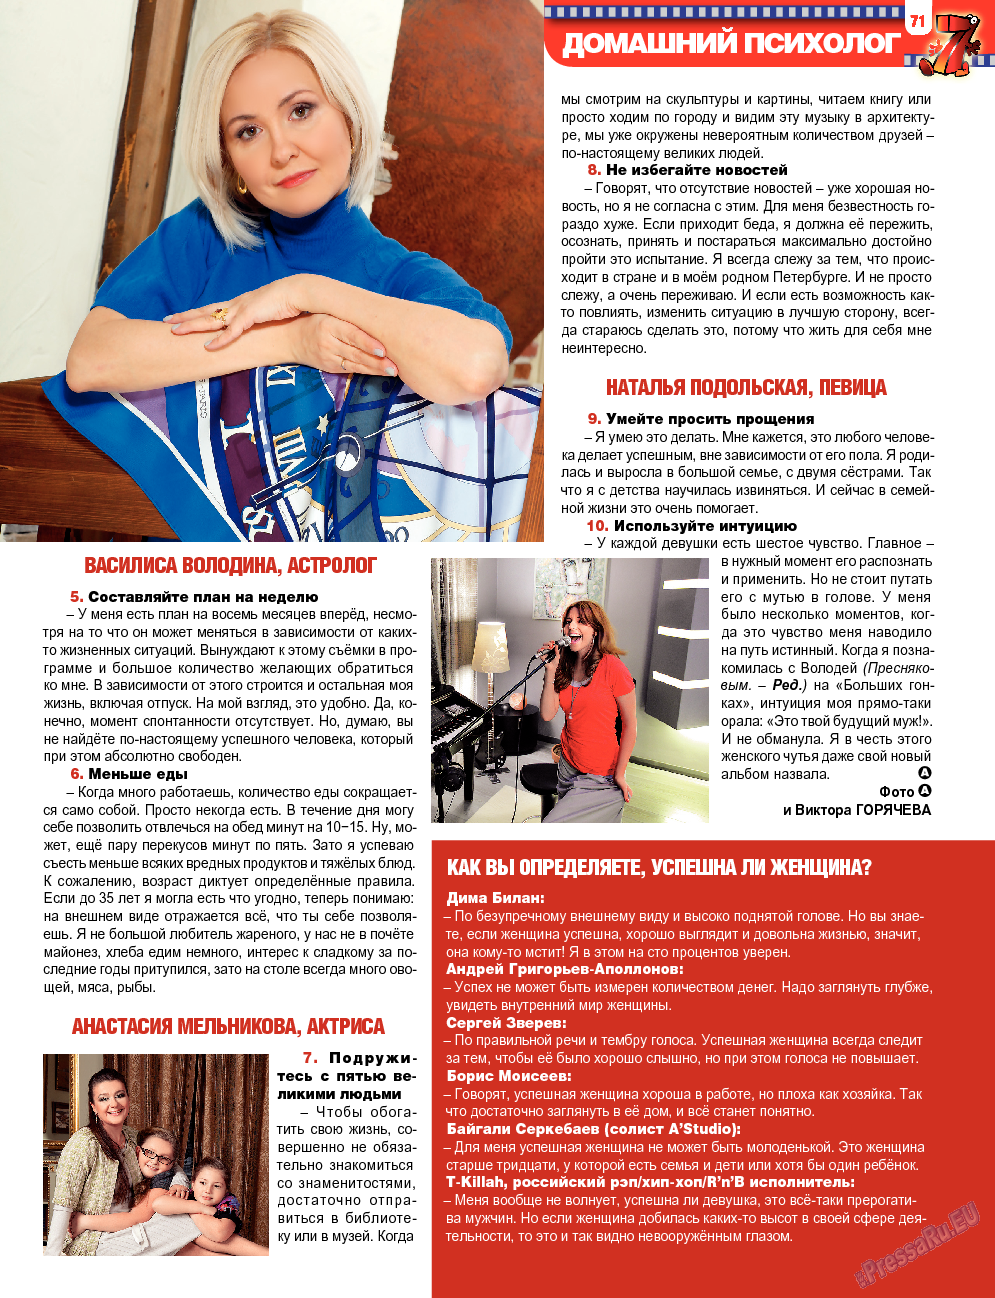 7плюс7я (журнал). 2013 год, номер 47, стр. 71